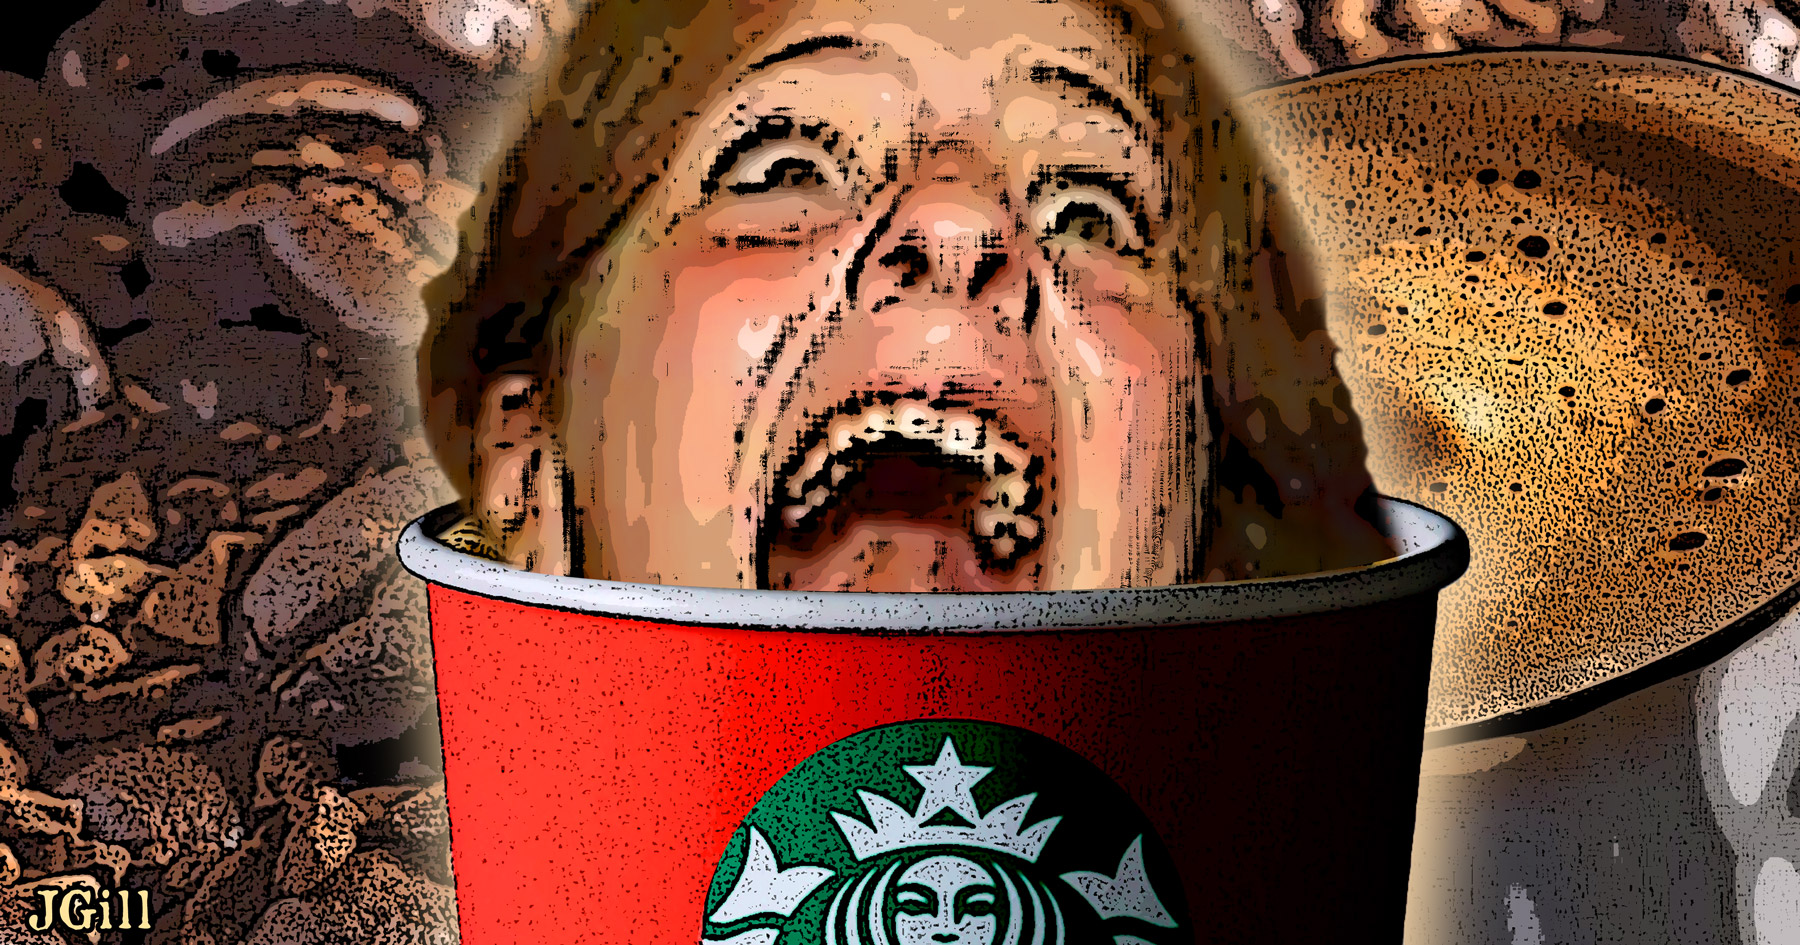 Starbucks, coffee, war on christmas, outrage, offense, folly, Common Sense